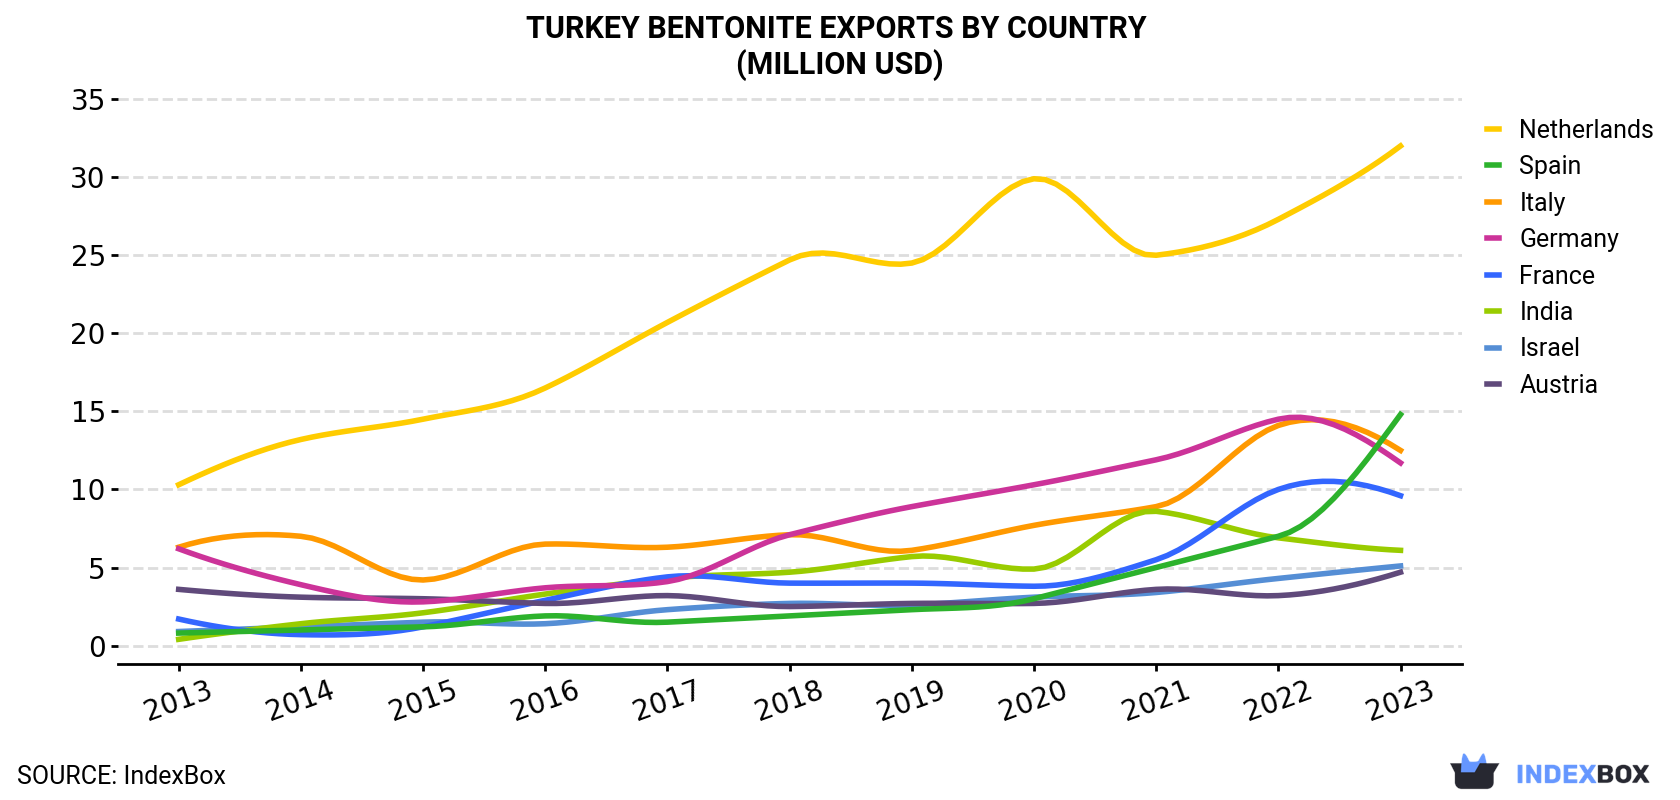 Turkey Bentonite Exports By Country (Million USD)